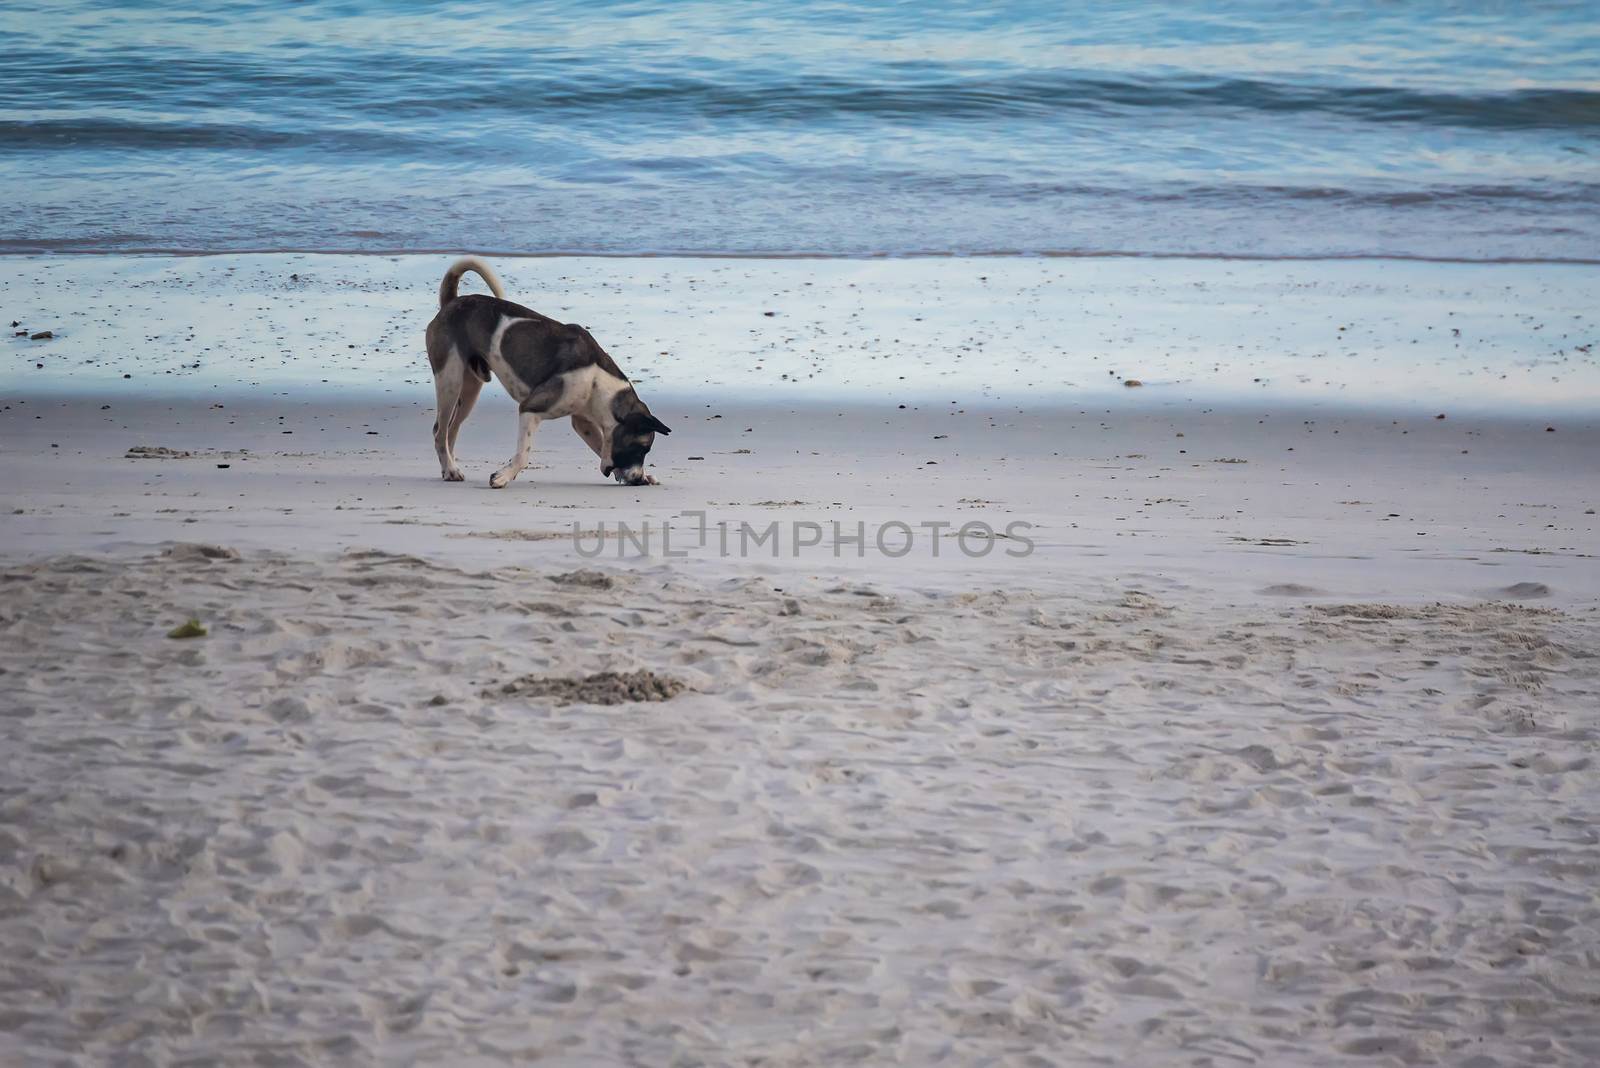 Homeless dogs on the beach